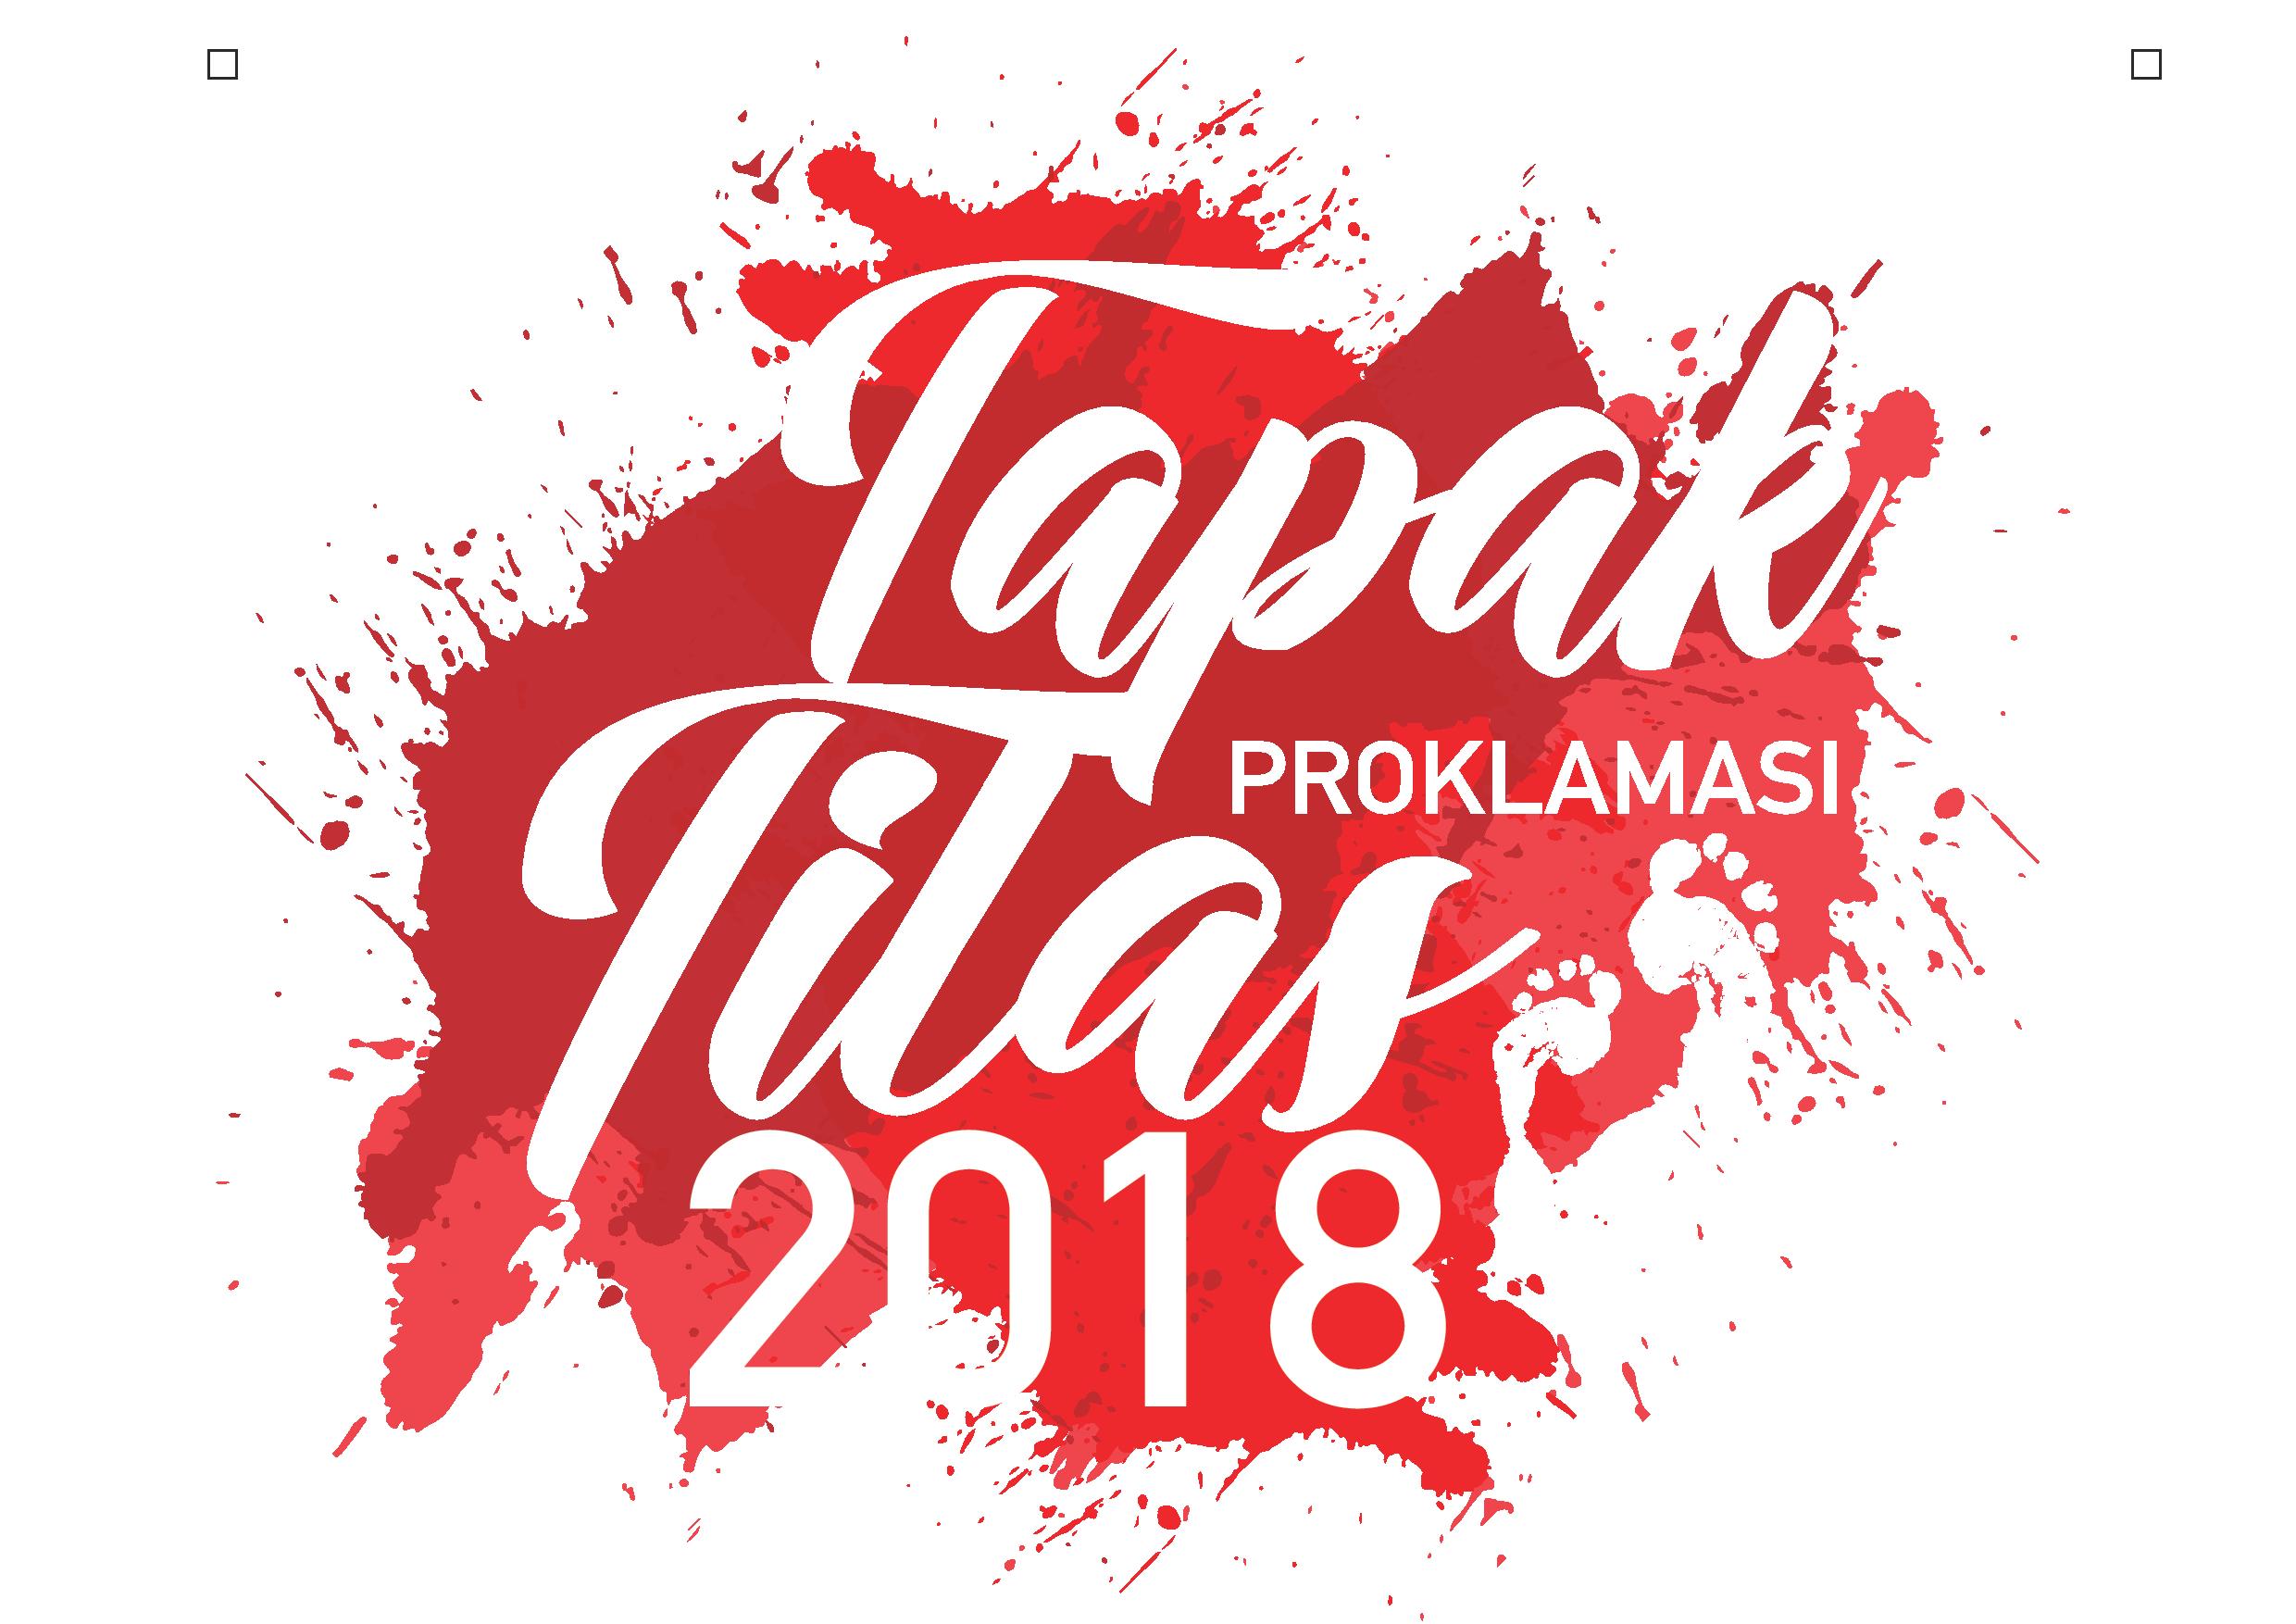 You are currently viewing ANTUSIASME MASYARAKAT MENGIKUTI TAPAK TILAS PROKLAMASI 2018